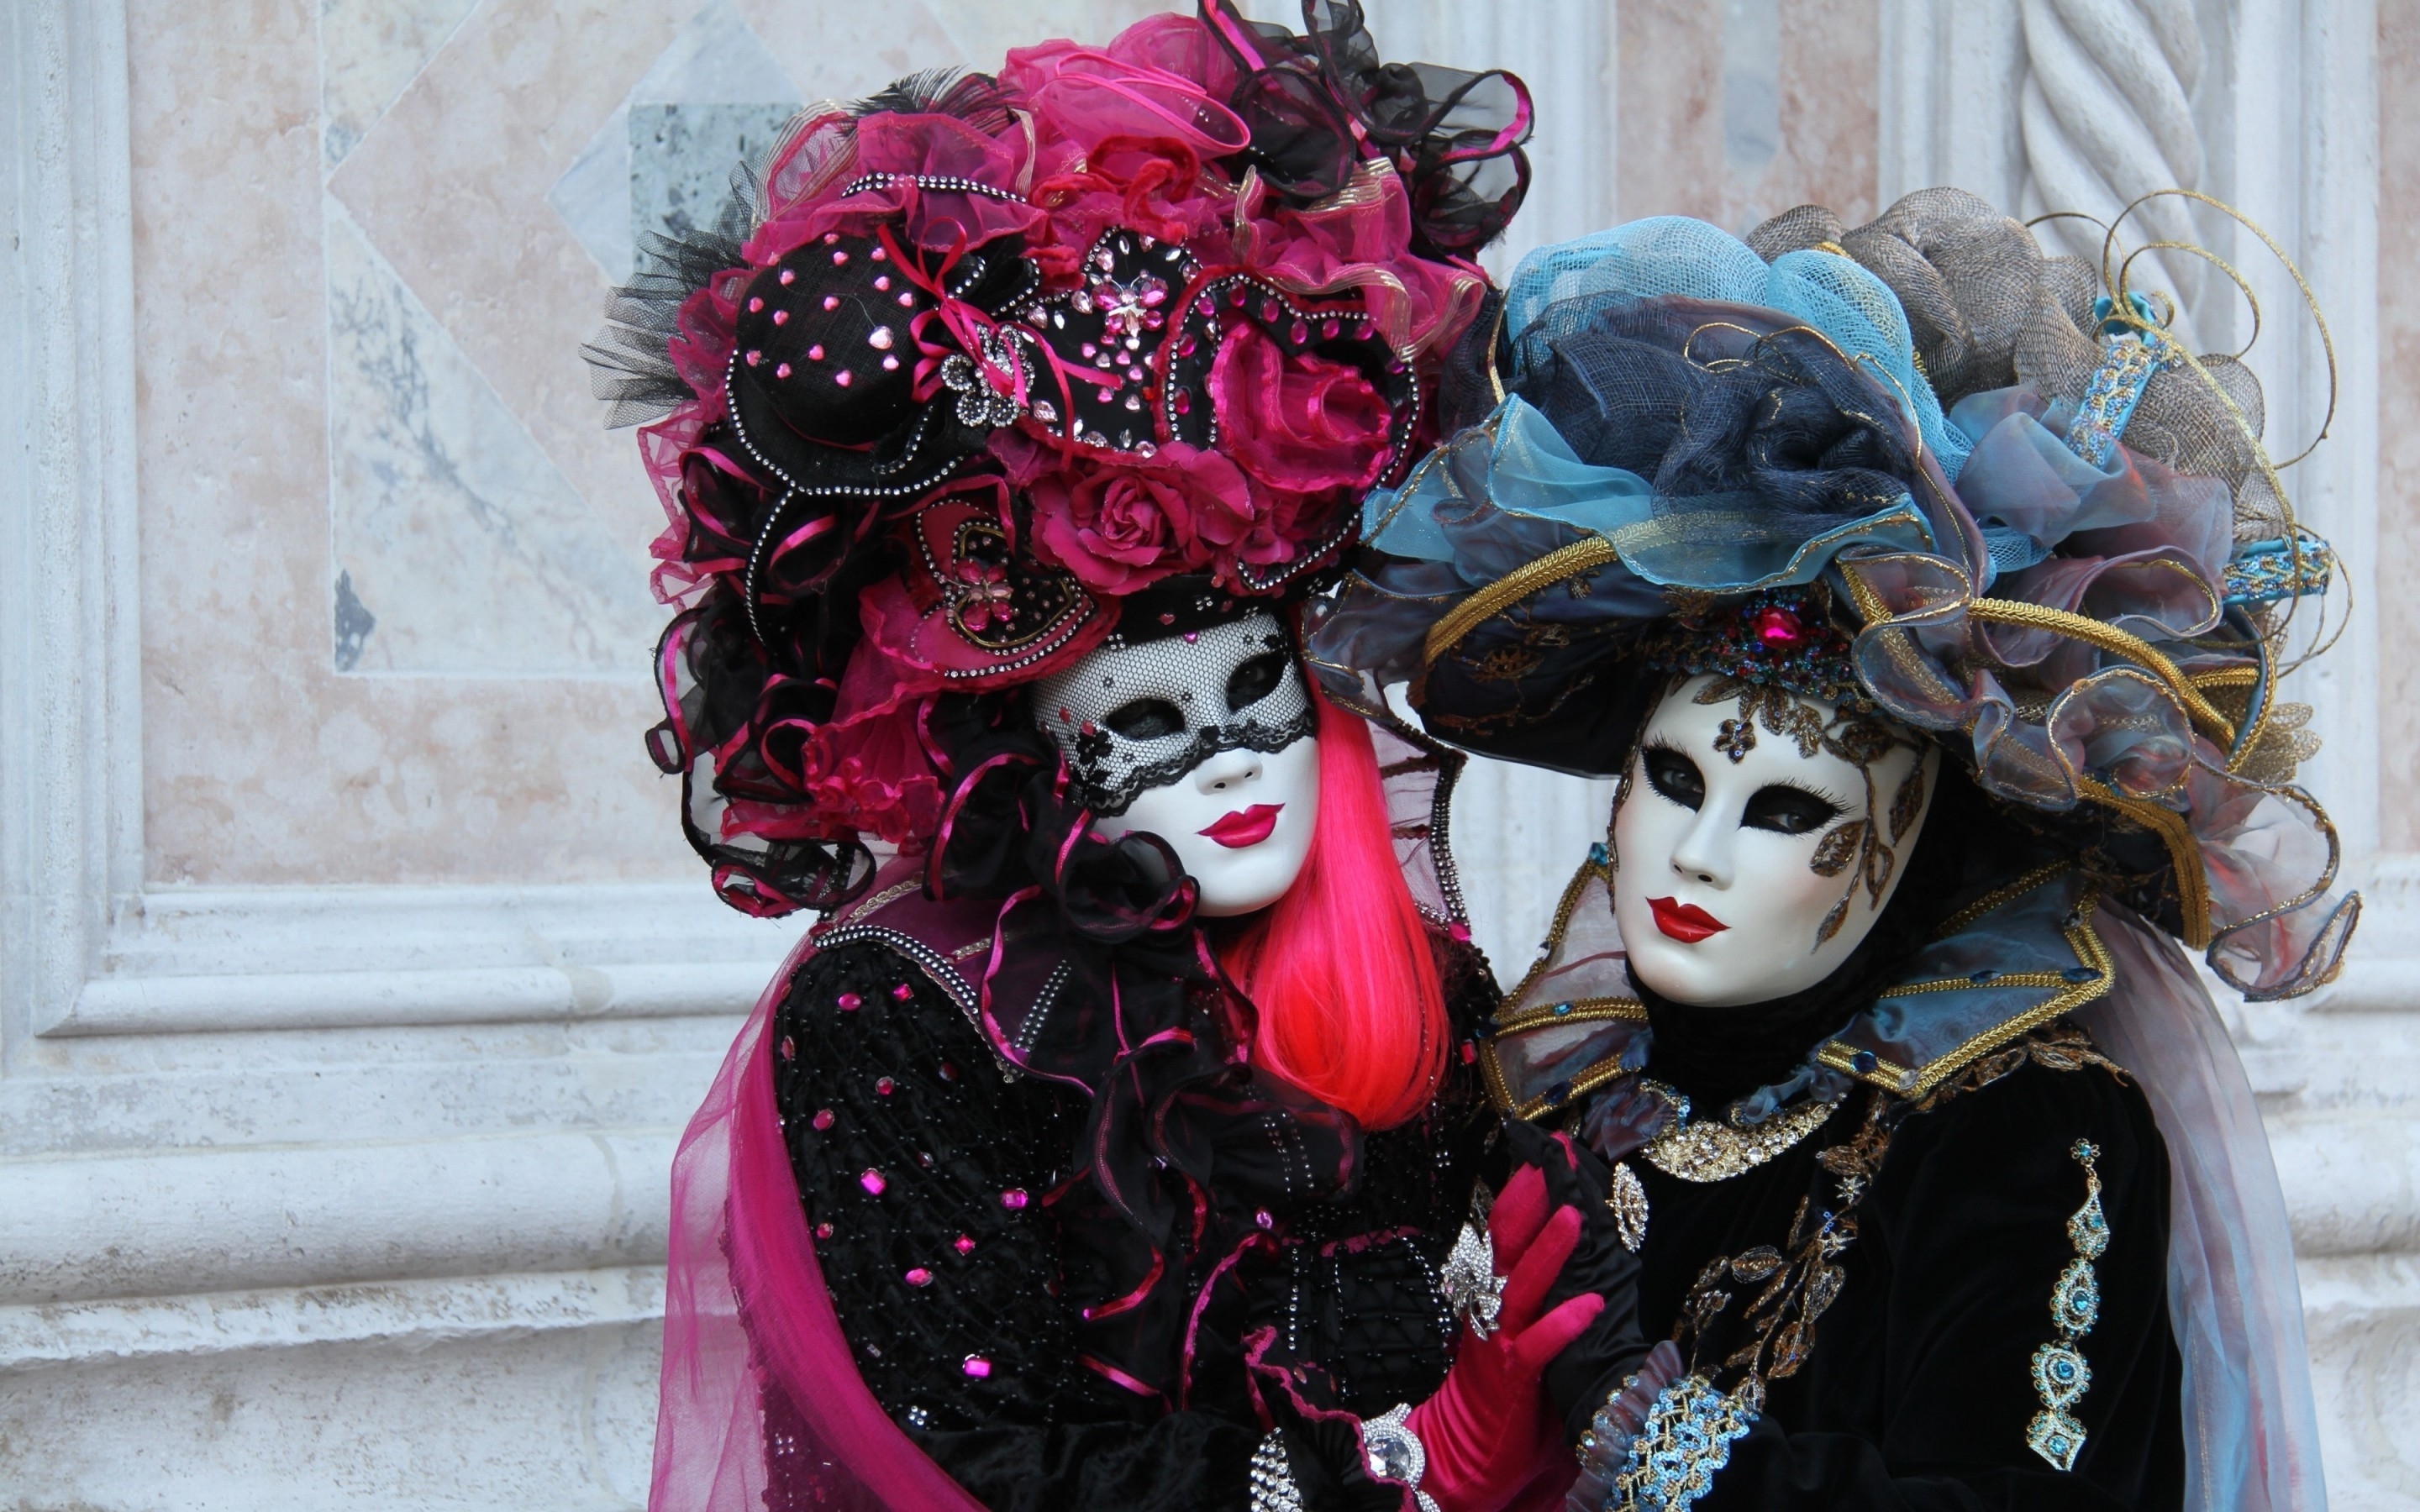 Venice Carnival for 2880 x 1800 Retina Display resolution